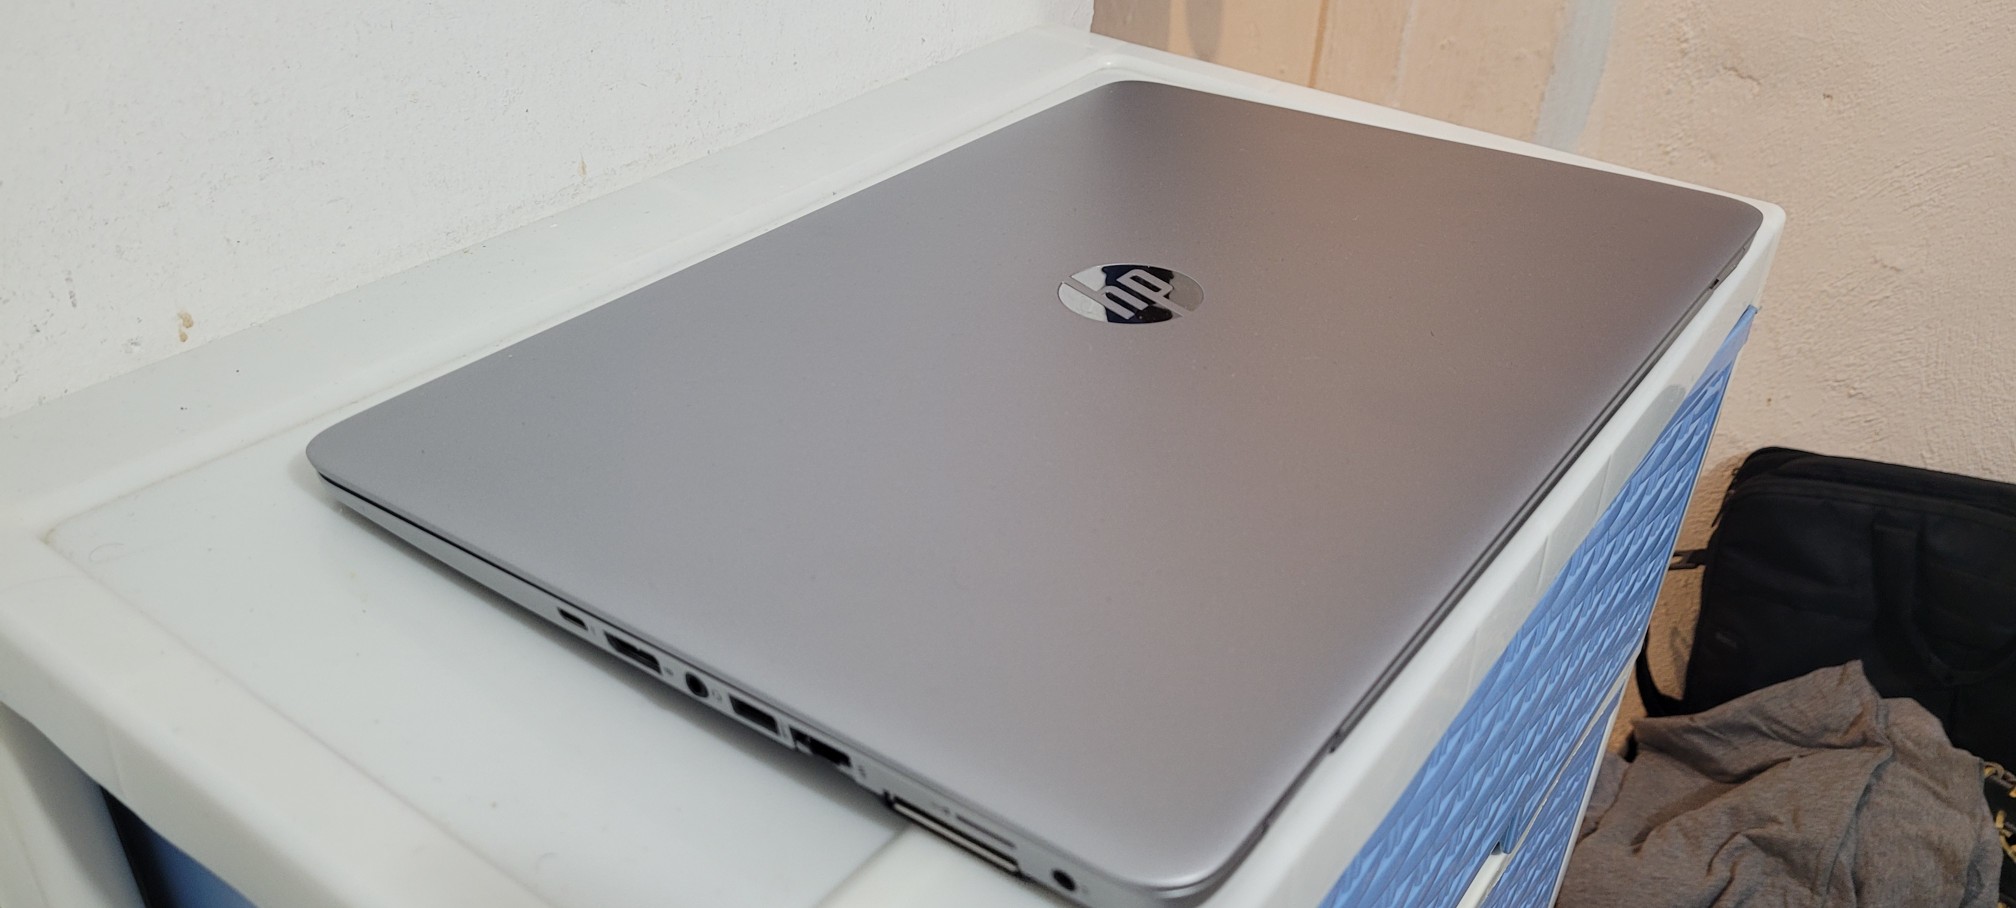 computadoras y laptops - laptop hp Slim 14 Pulg Core i5 6ta Gen Ram 8gb ddr4 Disco 500gb 2